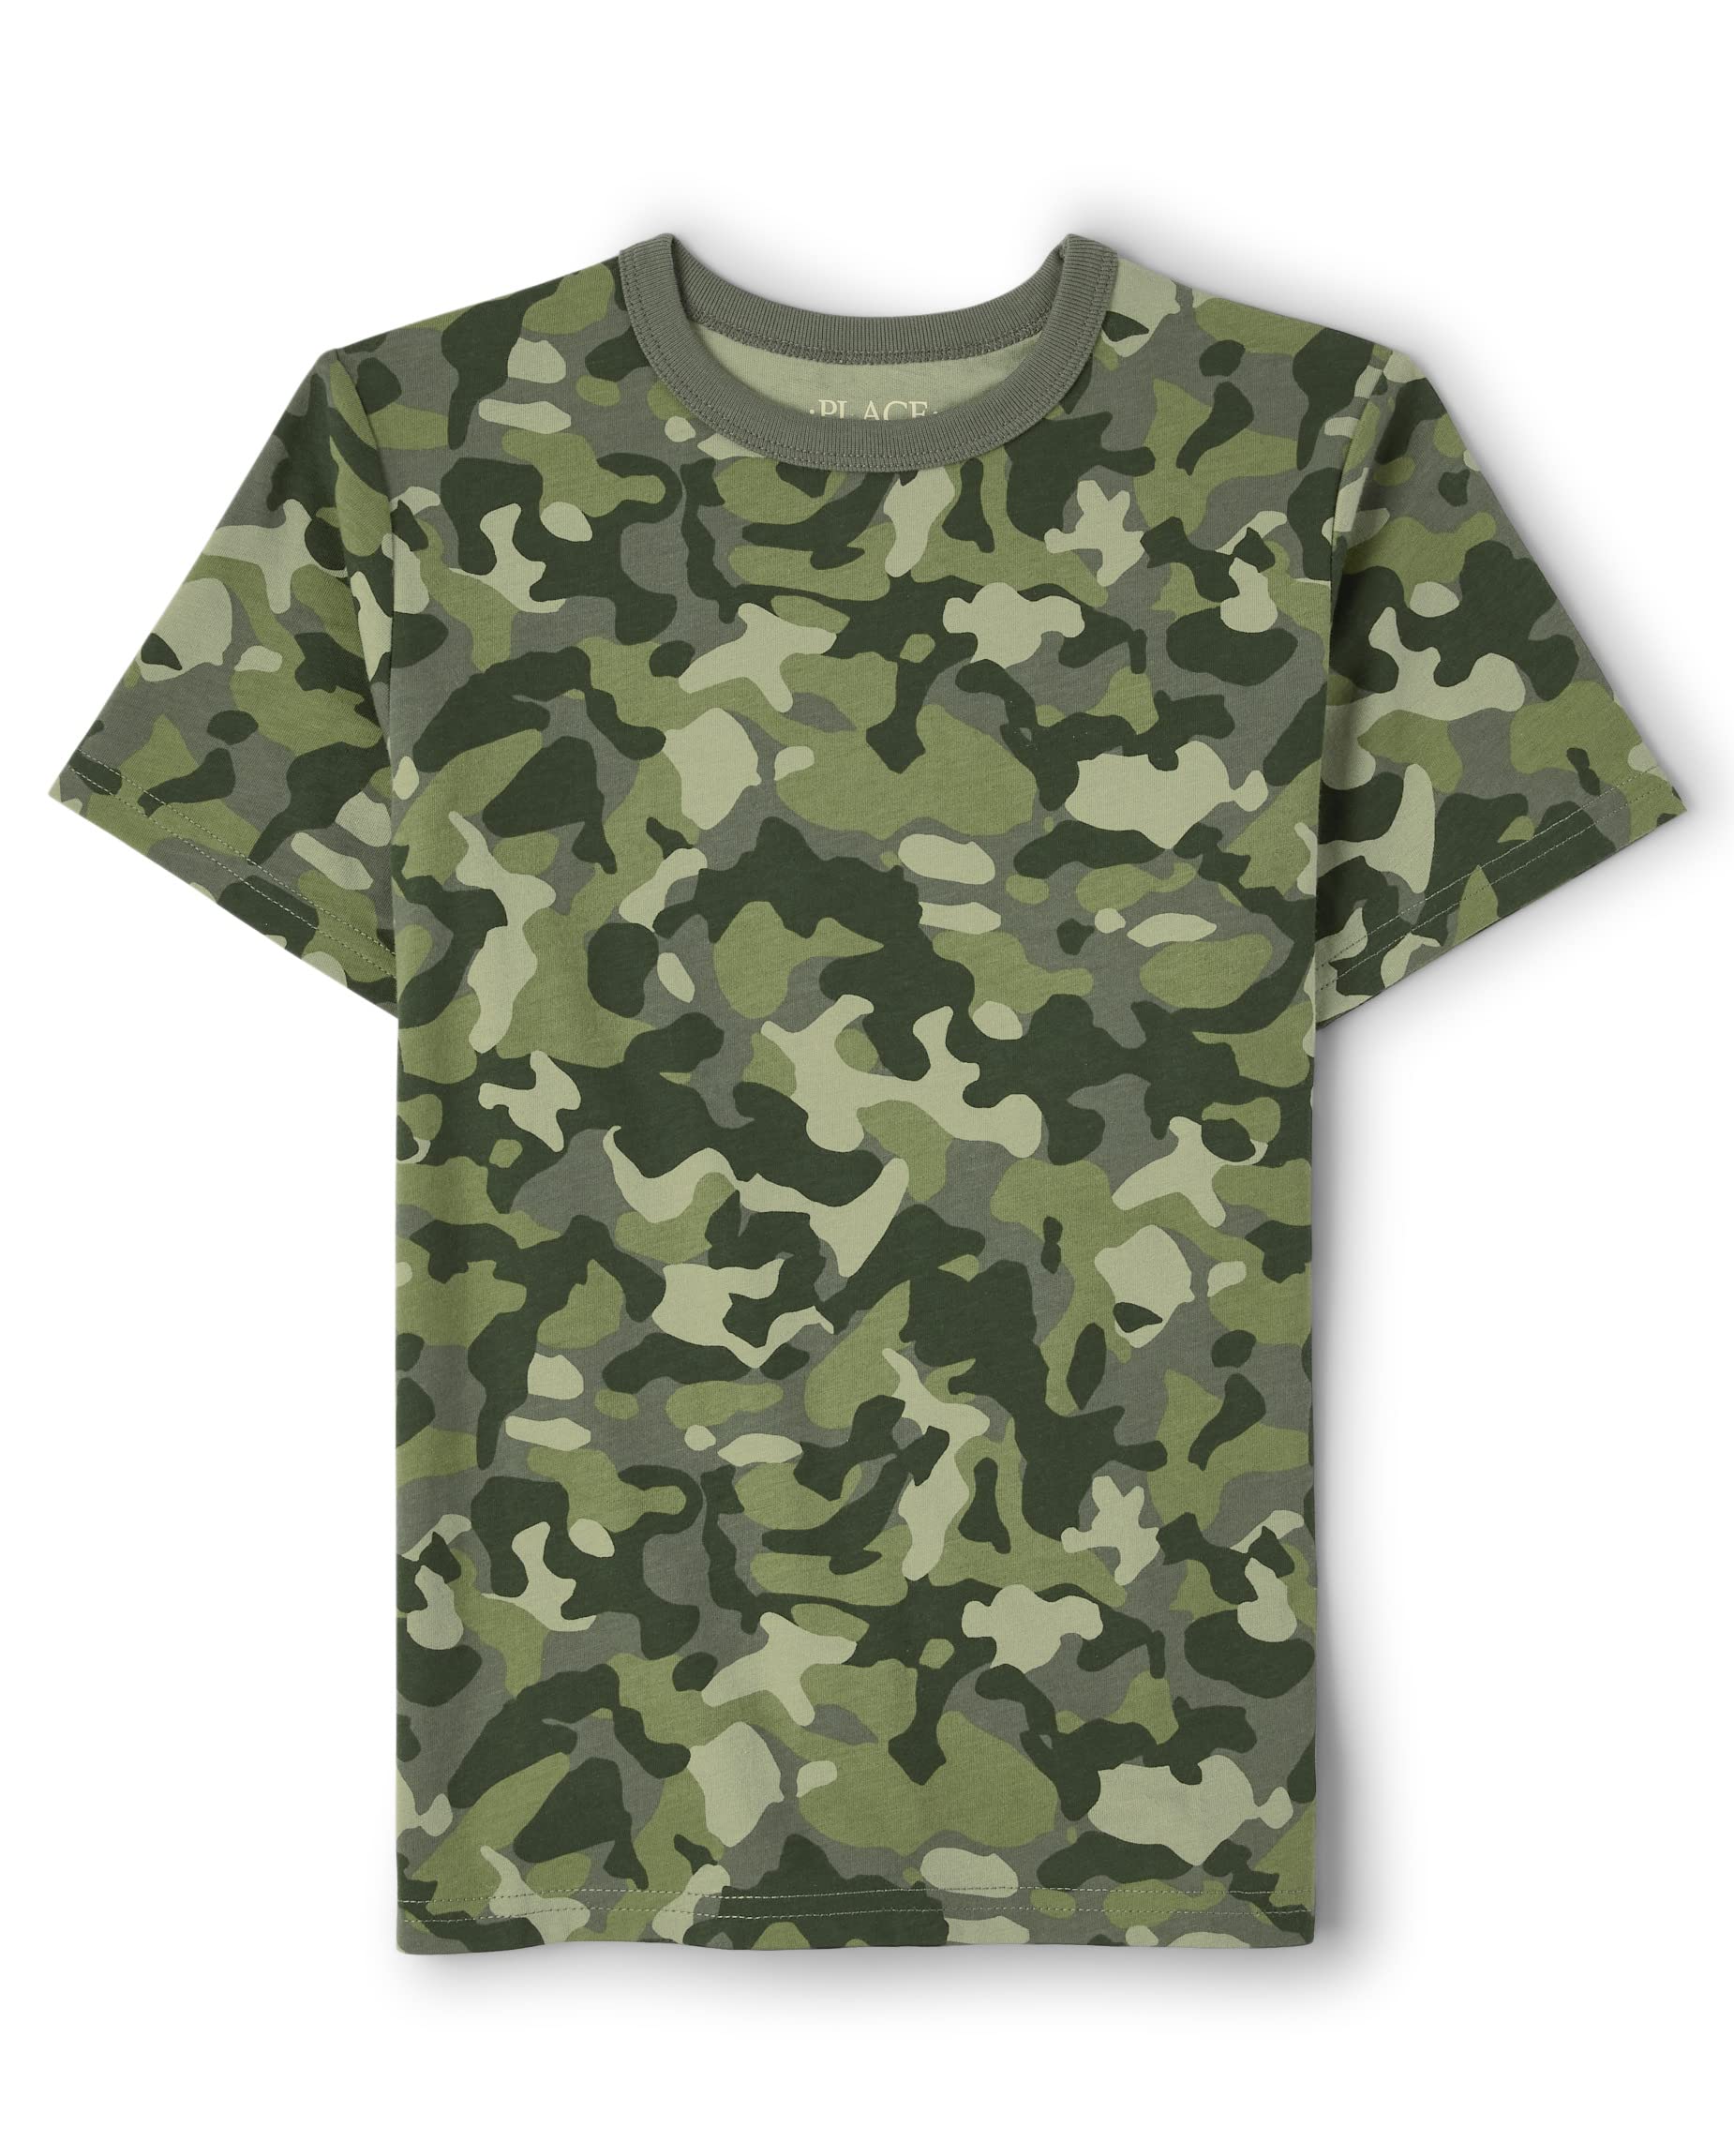 The Children's Place Boys' Short Sleeve Fashion Shirt, Green Camo, Medium (7/8),boys,Short SleeveCrewneck T-Shirt,Camo Green,7-8